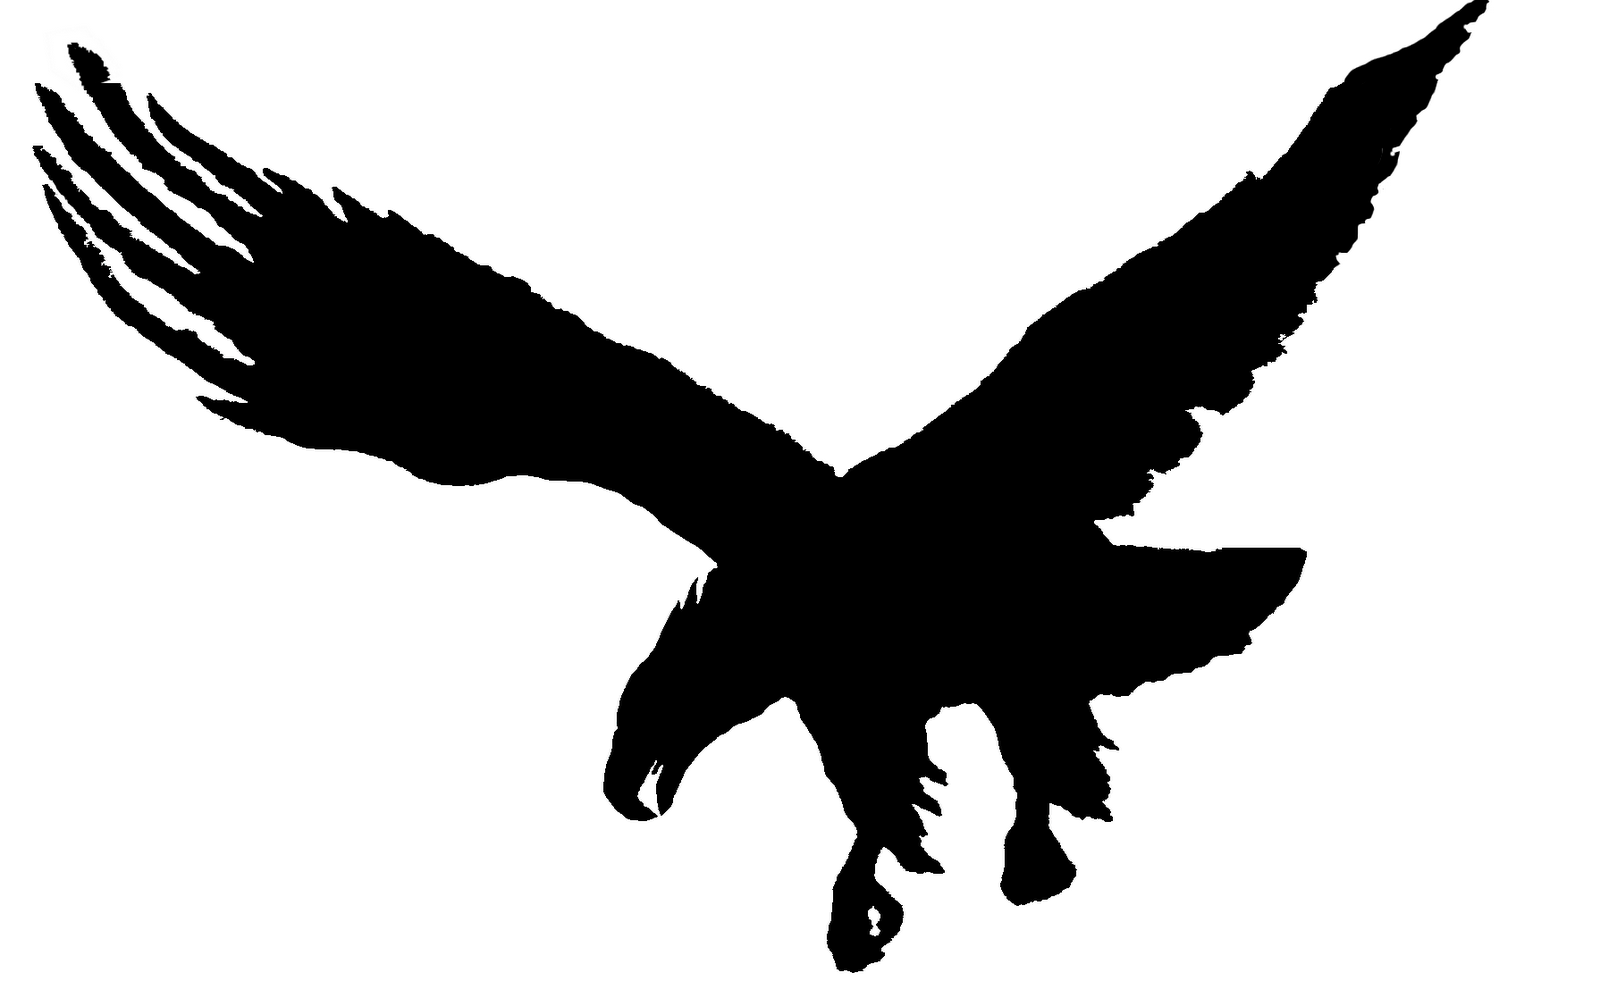 Eagles silhouette clipart